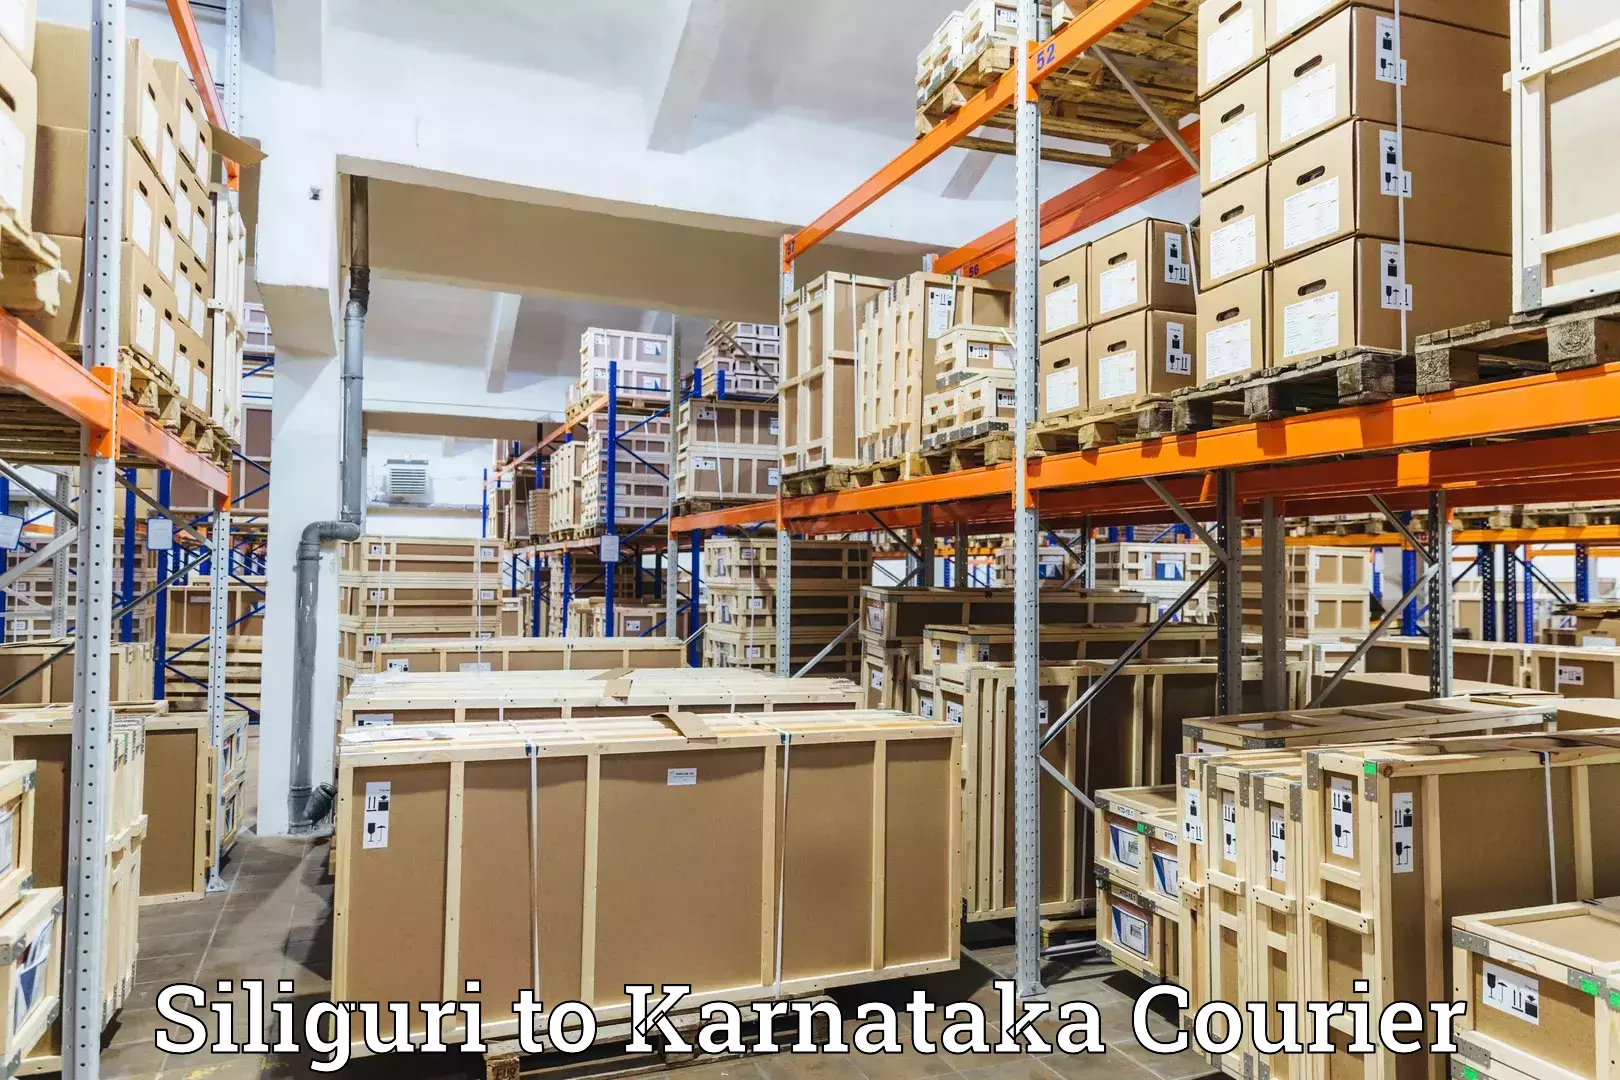 High-speed parcel service Siliguri to Kanjarakatte